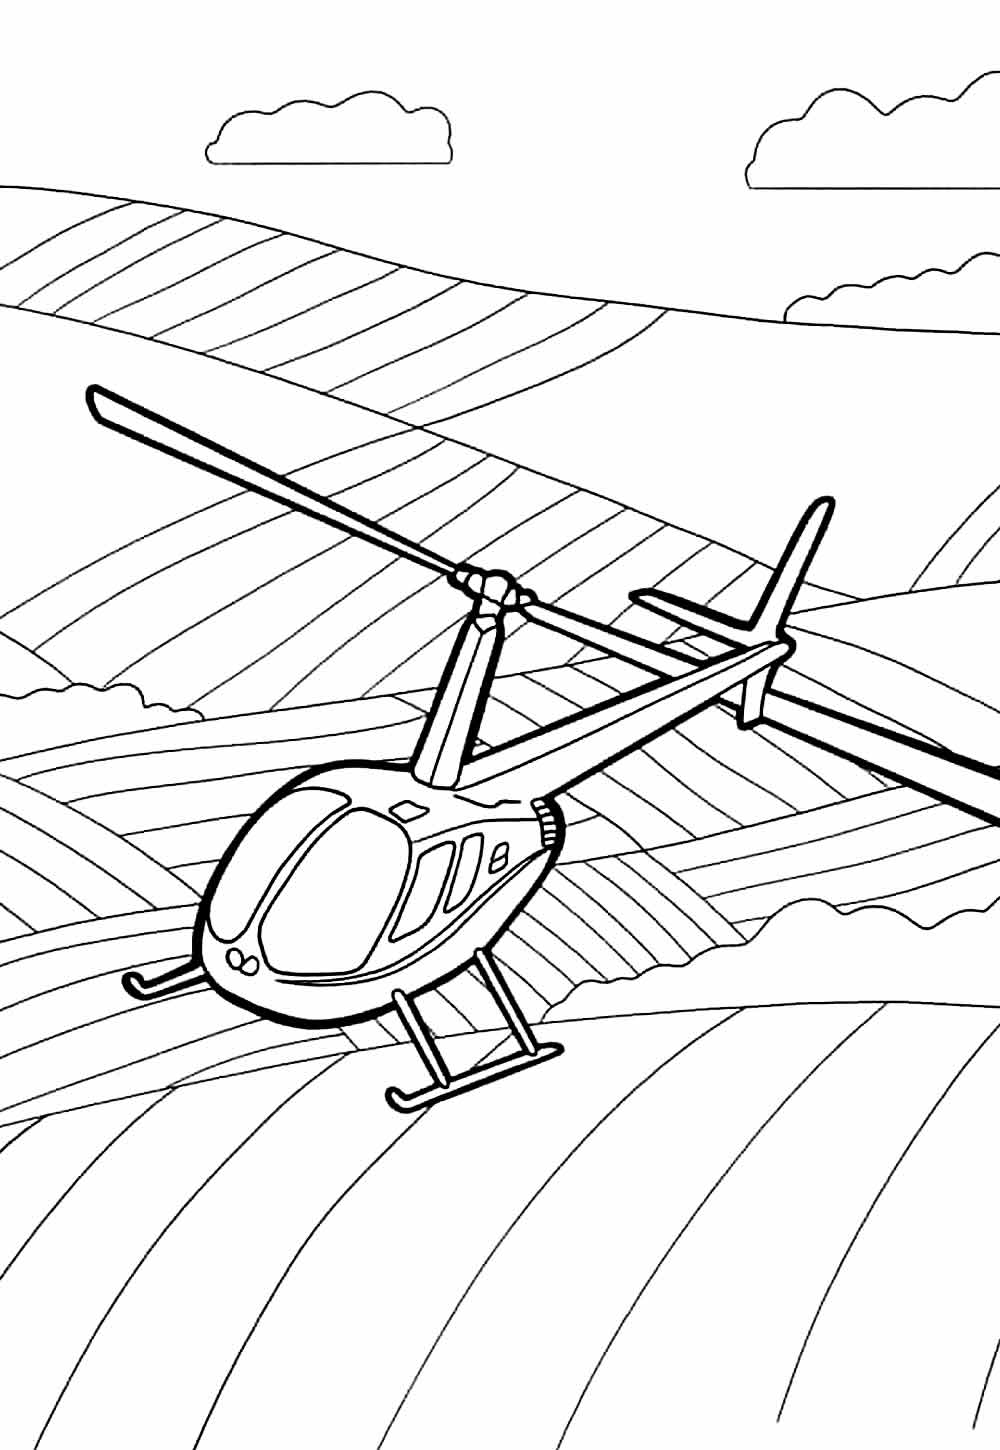 Desenho para colorir de Helicóptero